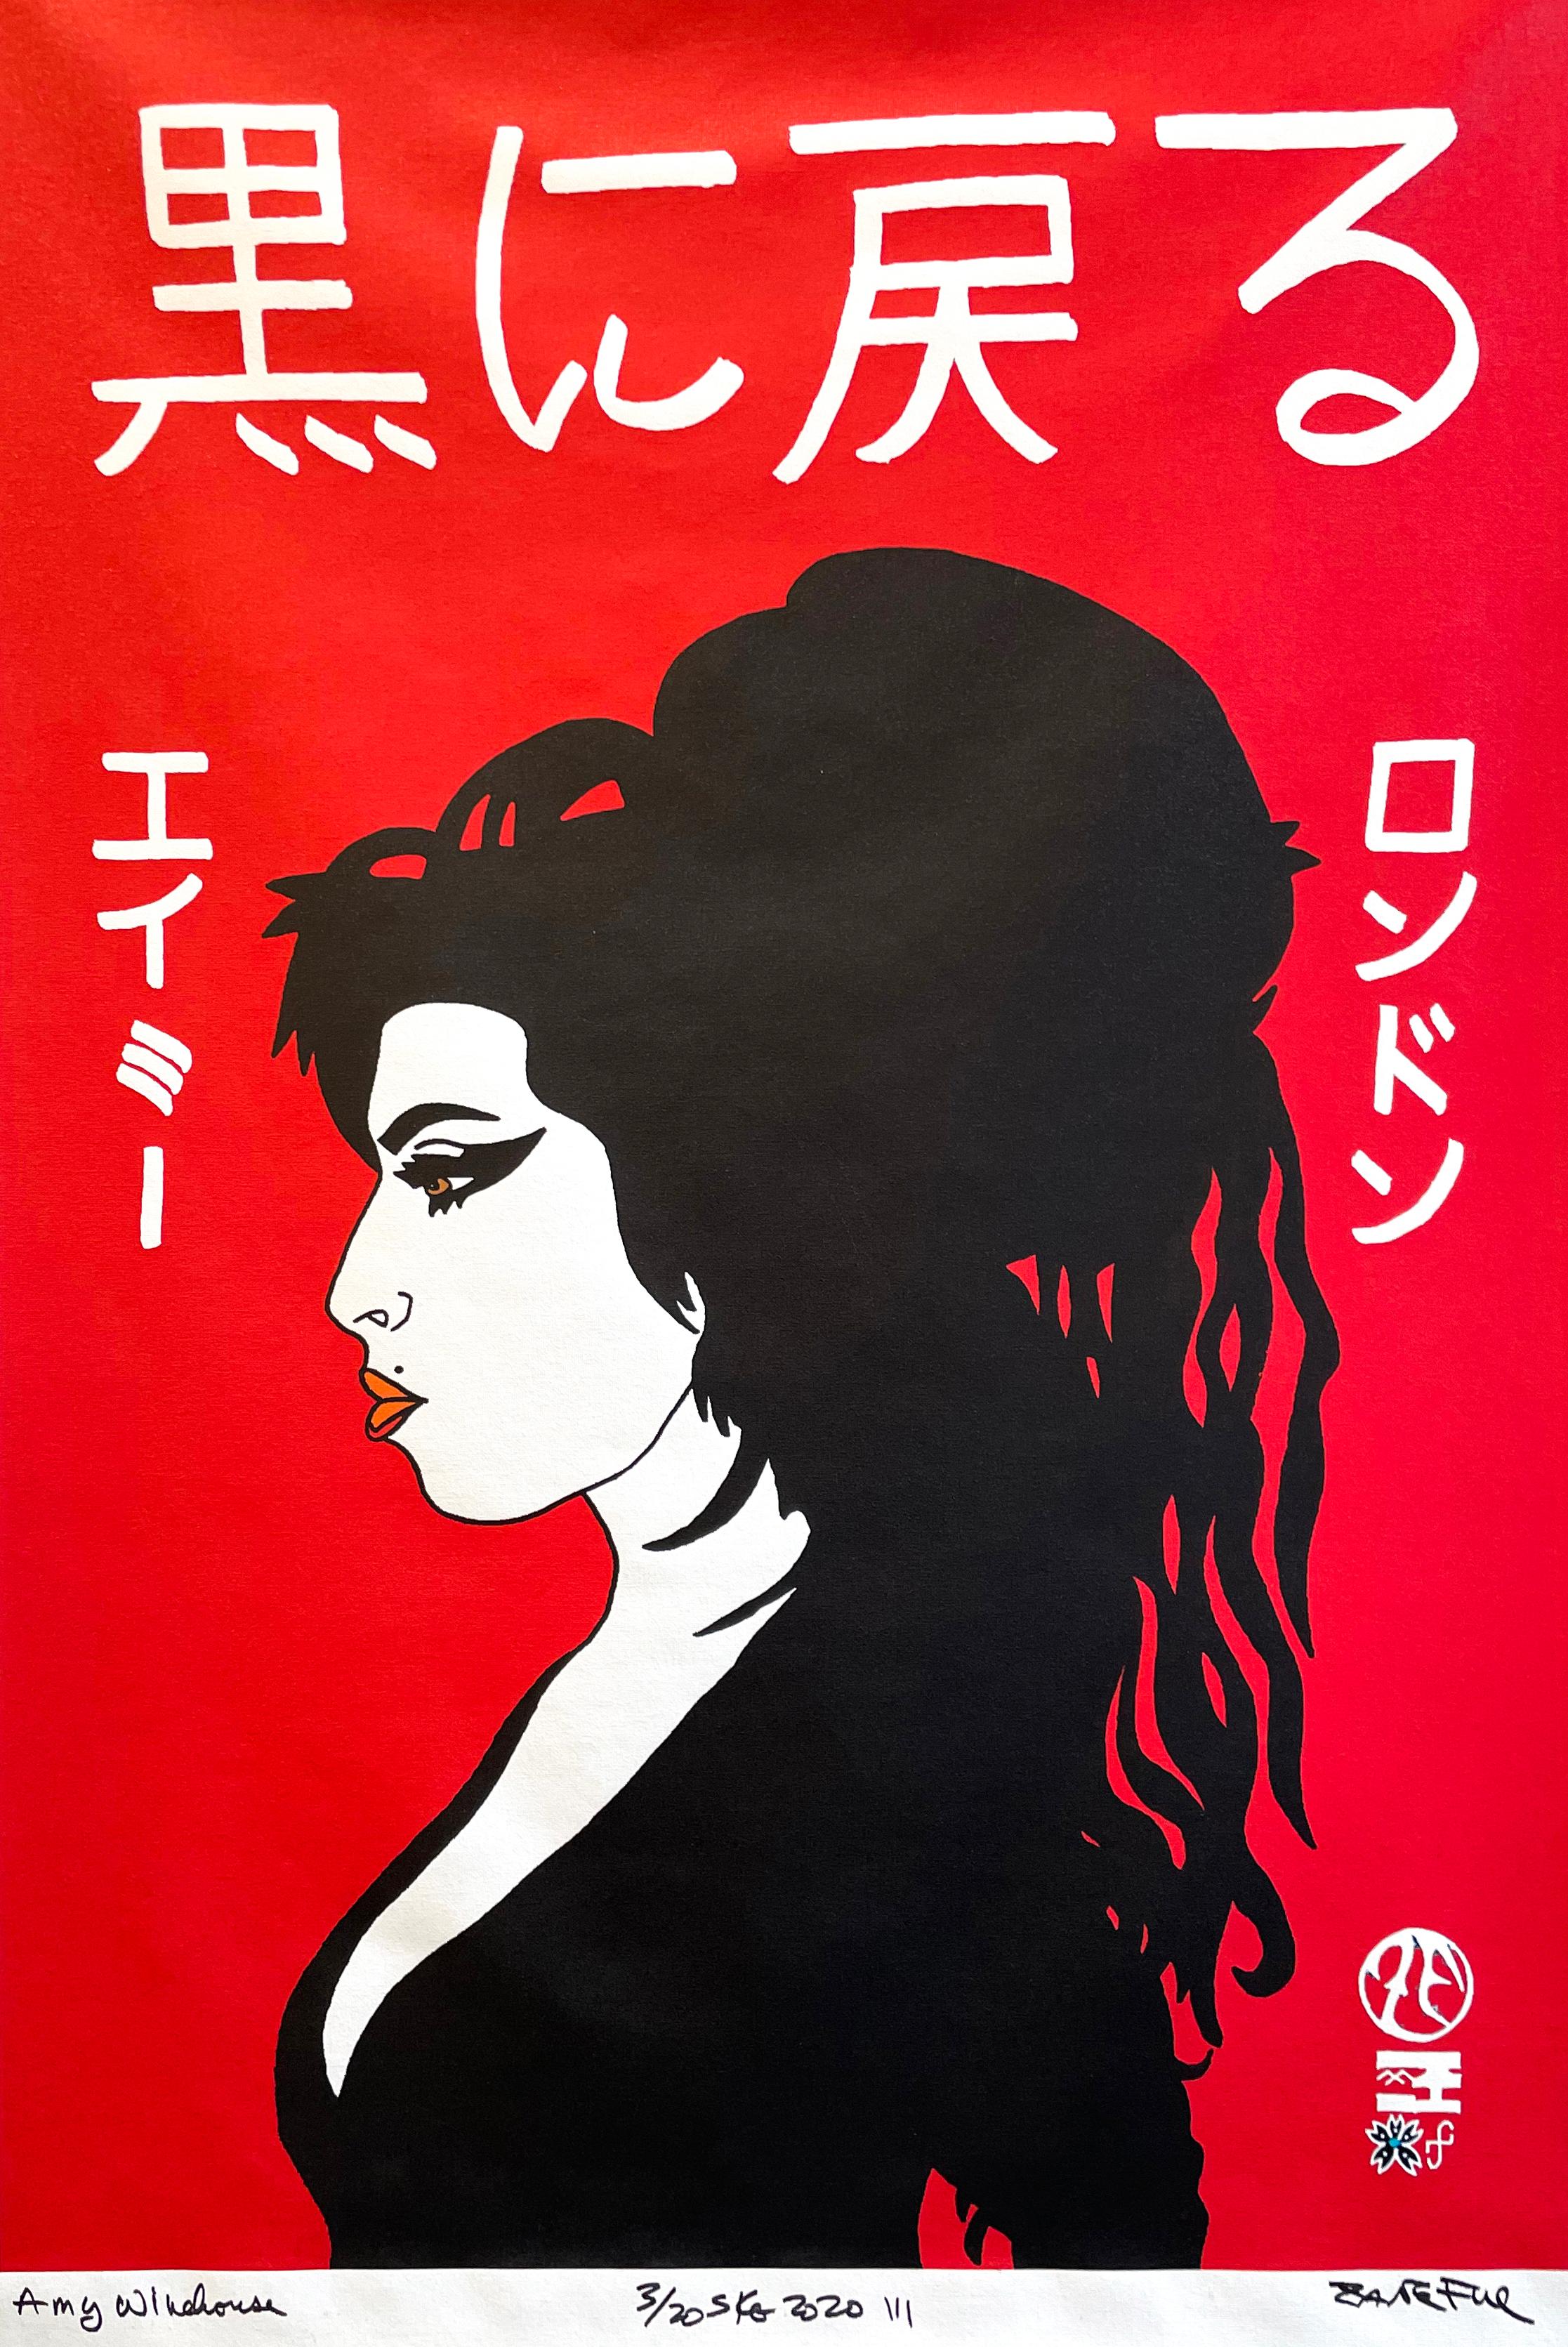 Amy Winehouse, Back to Black Ltd Ed Contemporary Pop Screenprint on Canvas 2020 - Print by Zane Fix